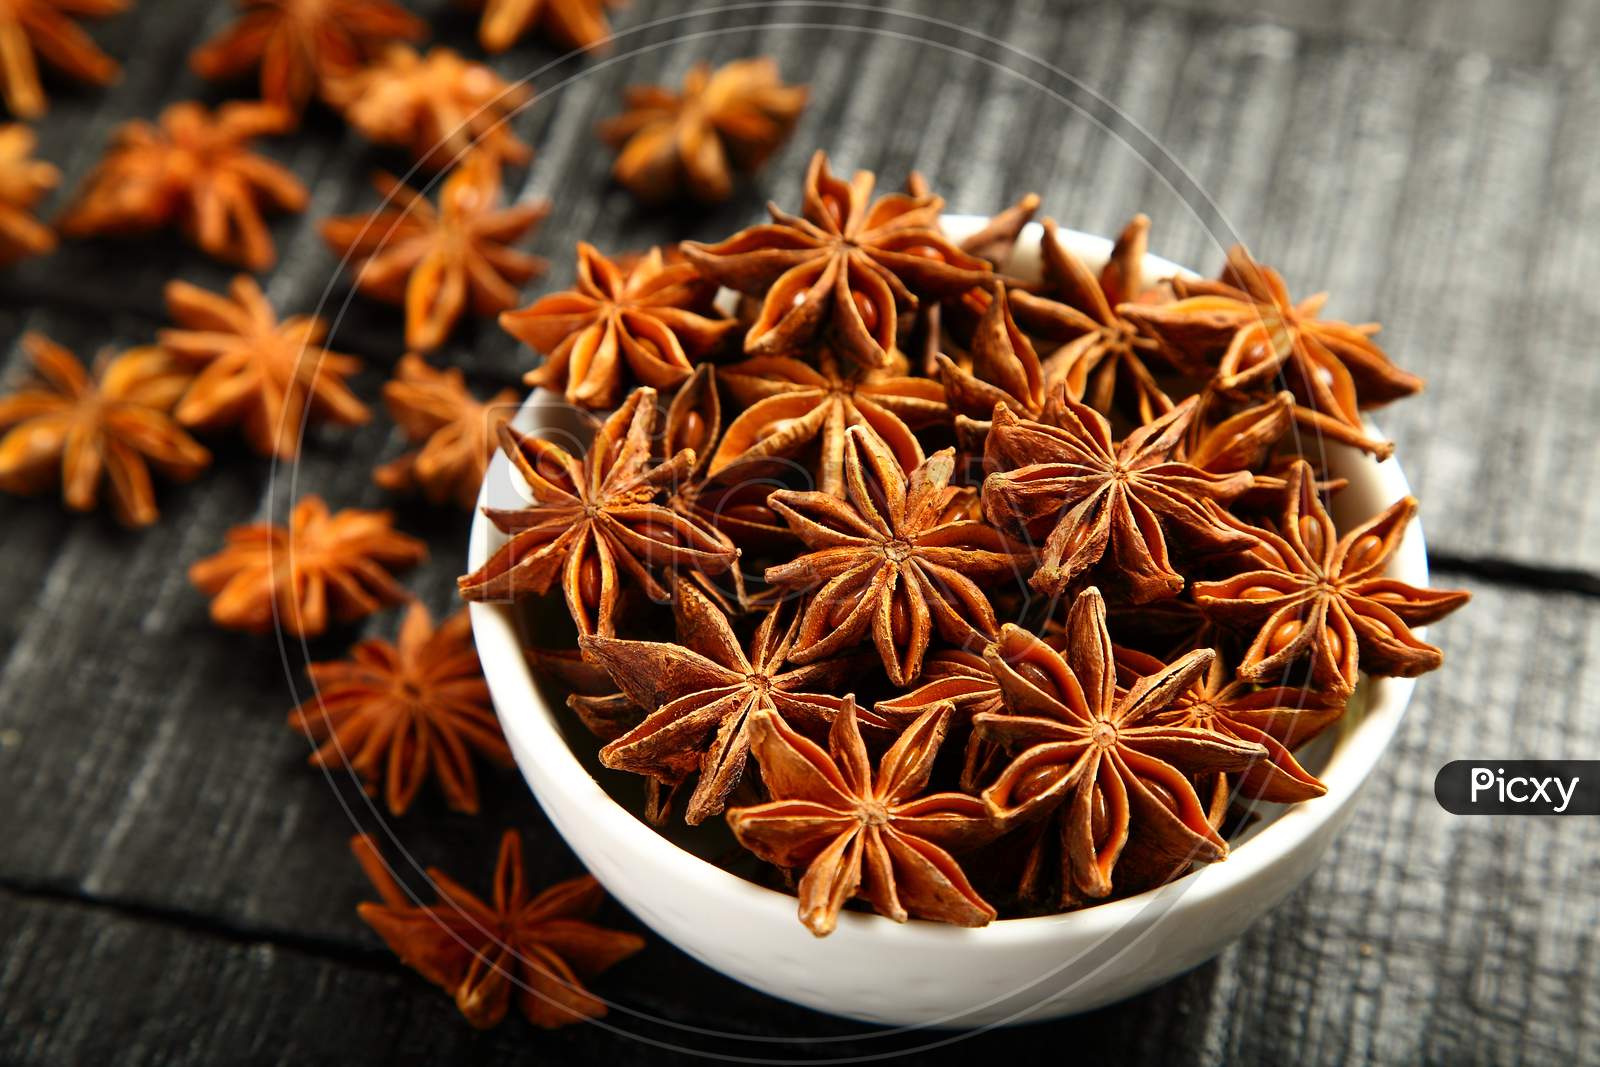 Fresh dried star anise.